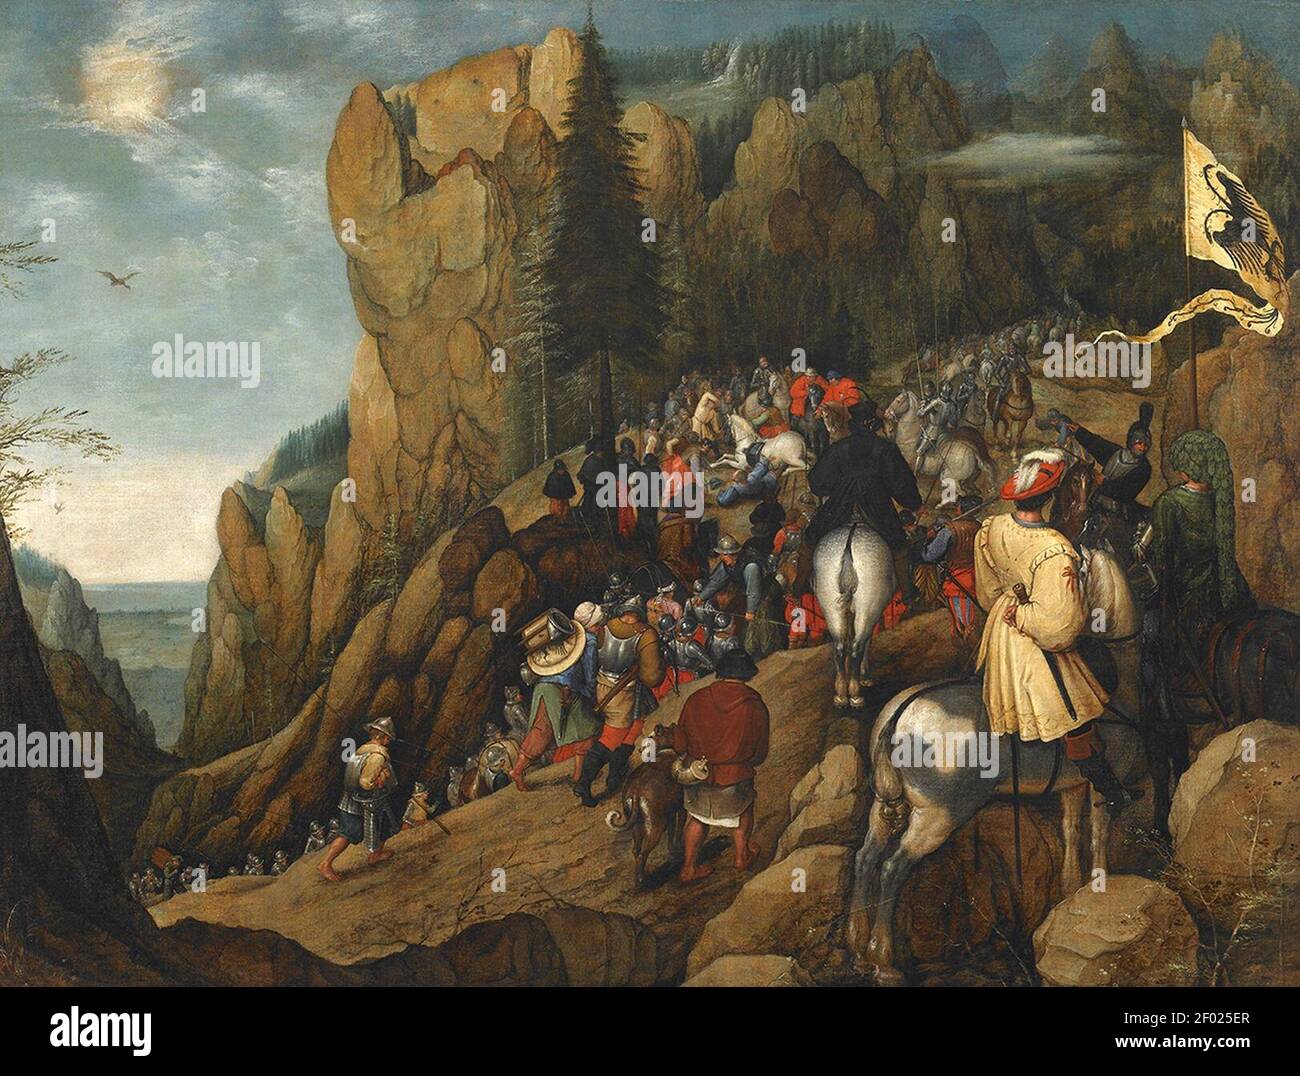 Pieter Brueghel le jeune - La conversion de Saint Paul. Stock Photo